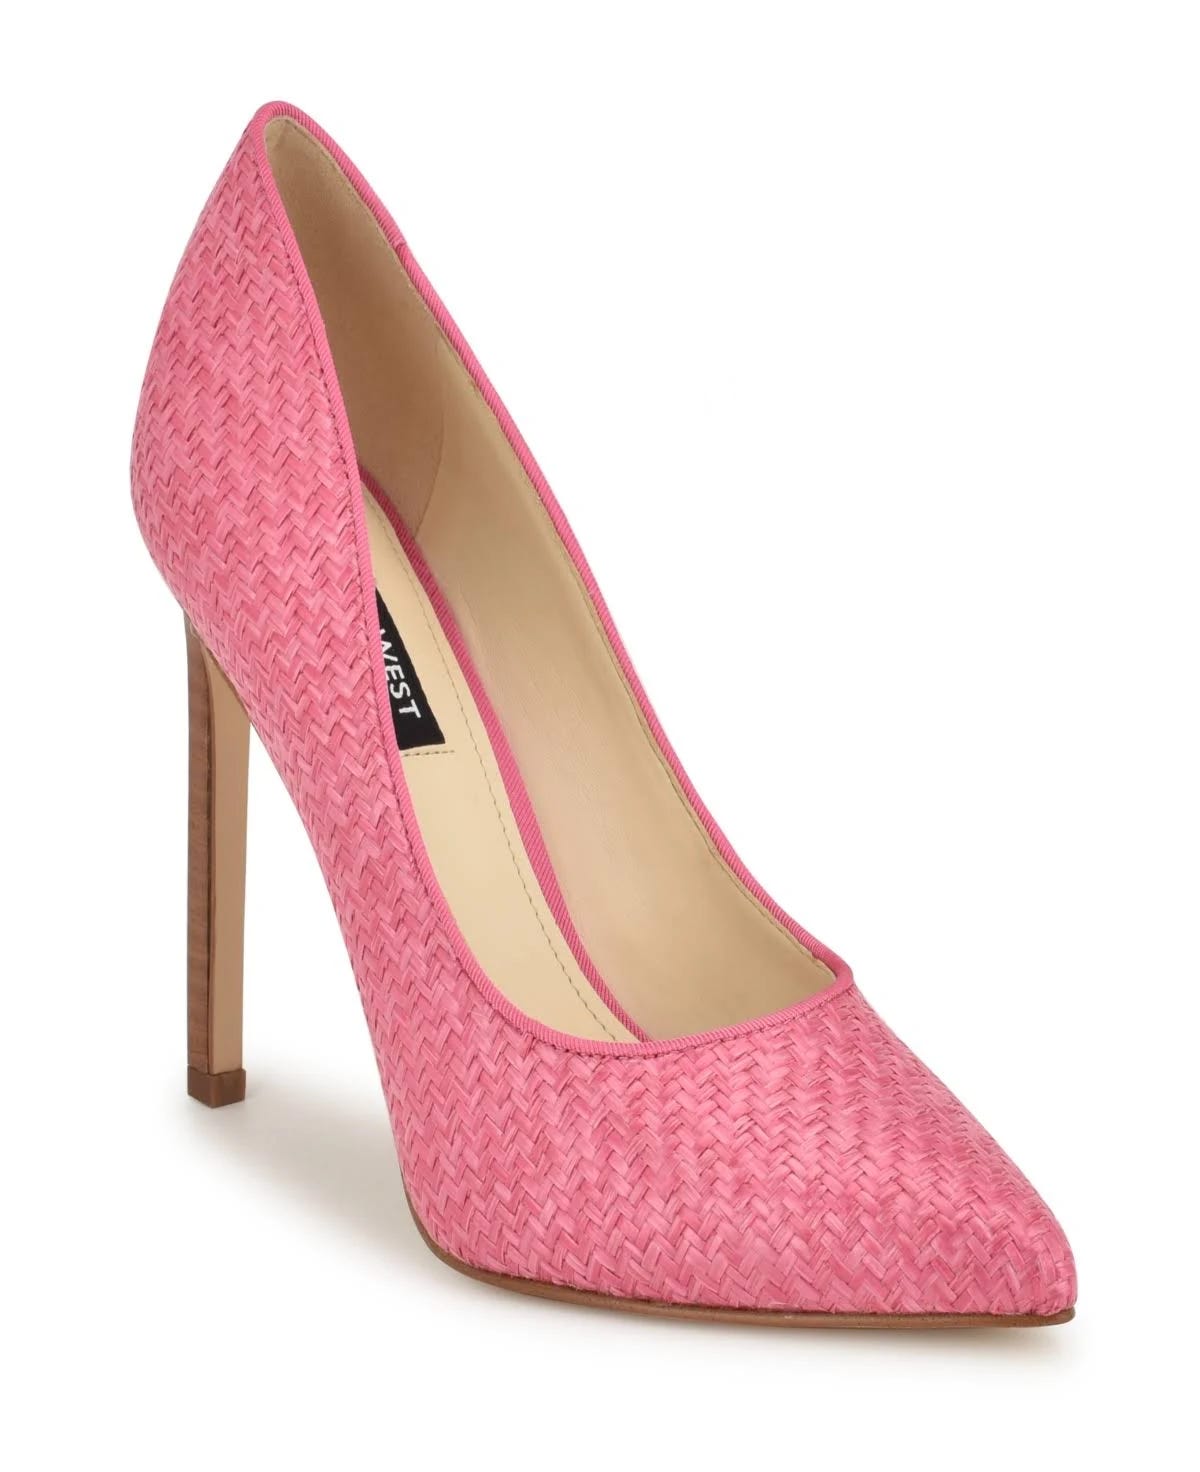 Pink Slip-On Heels by Nine West: Stylish and Sleek | Image